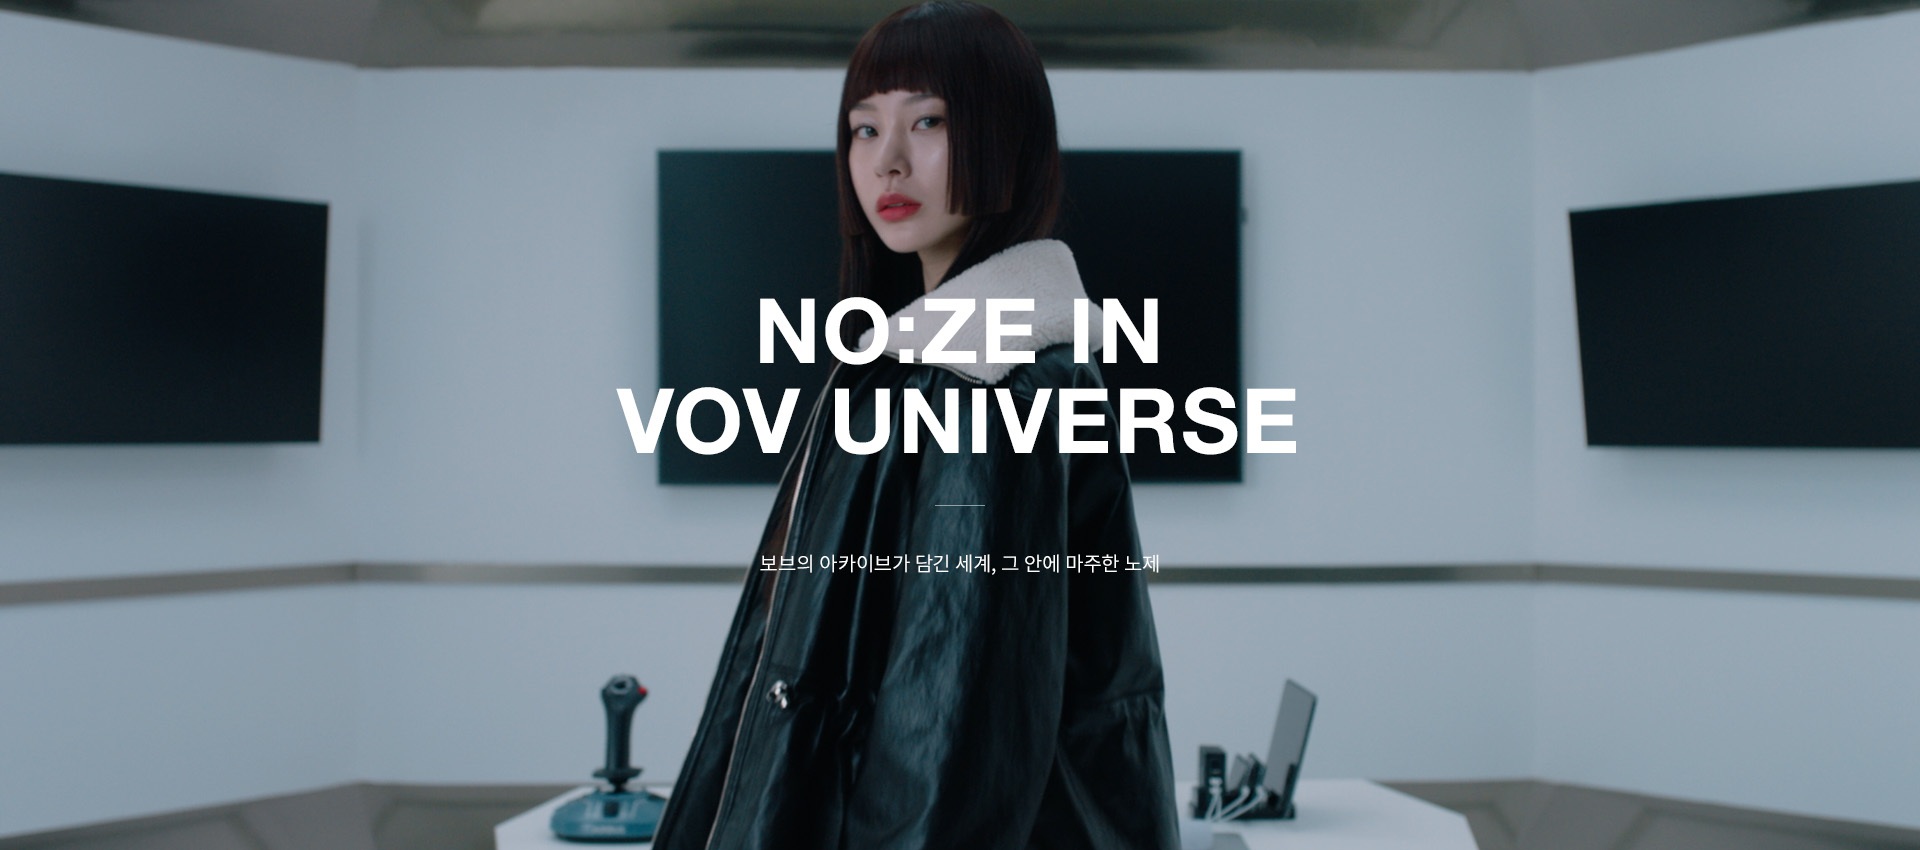 NO:ZE in VOV UNIVERSE